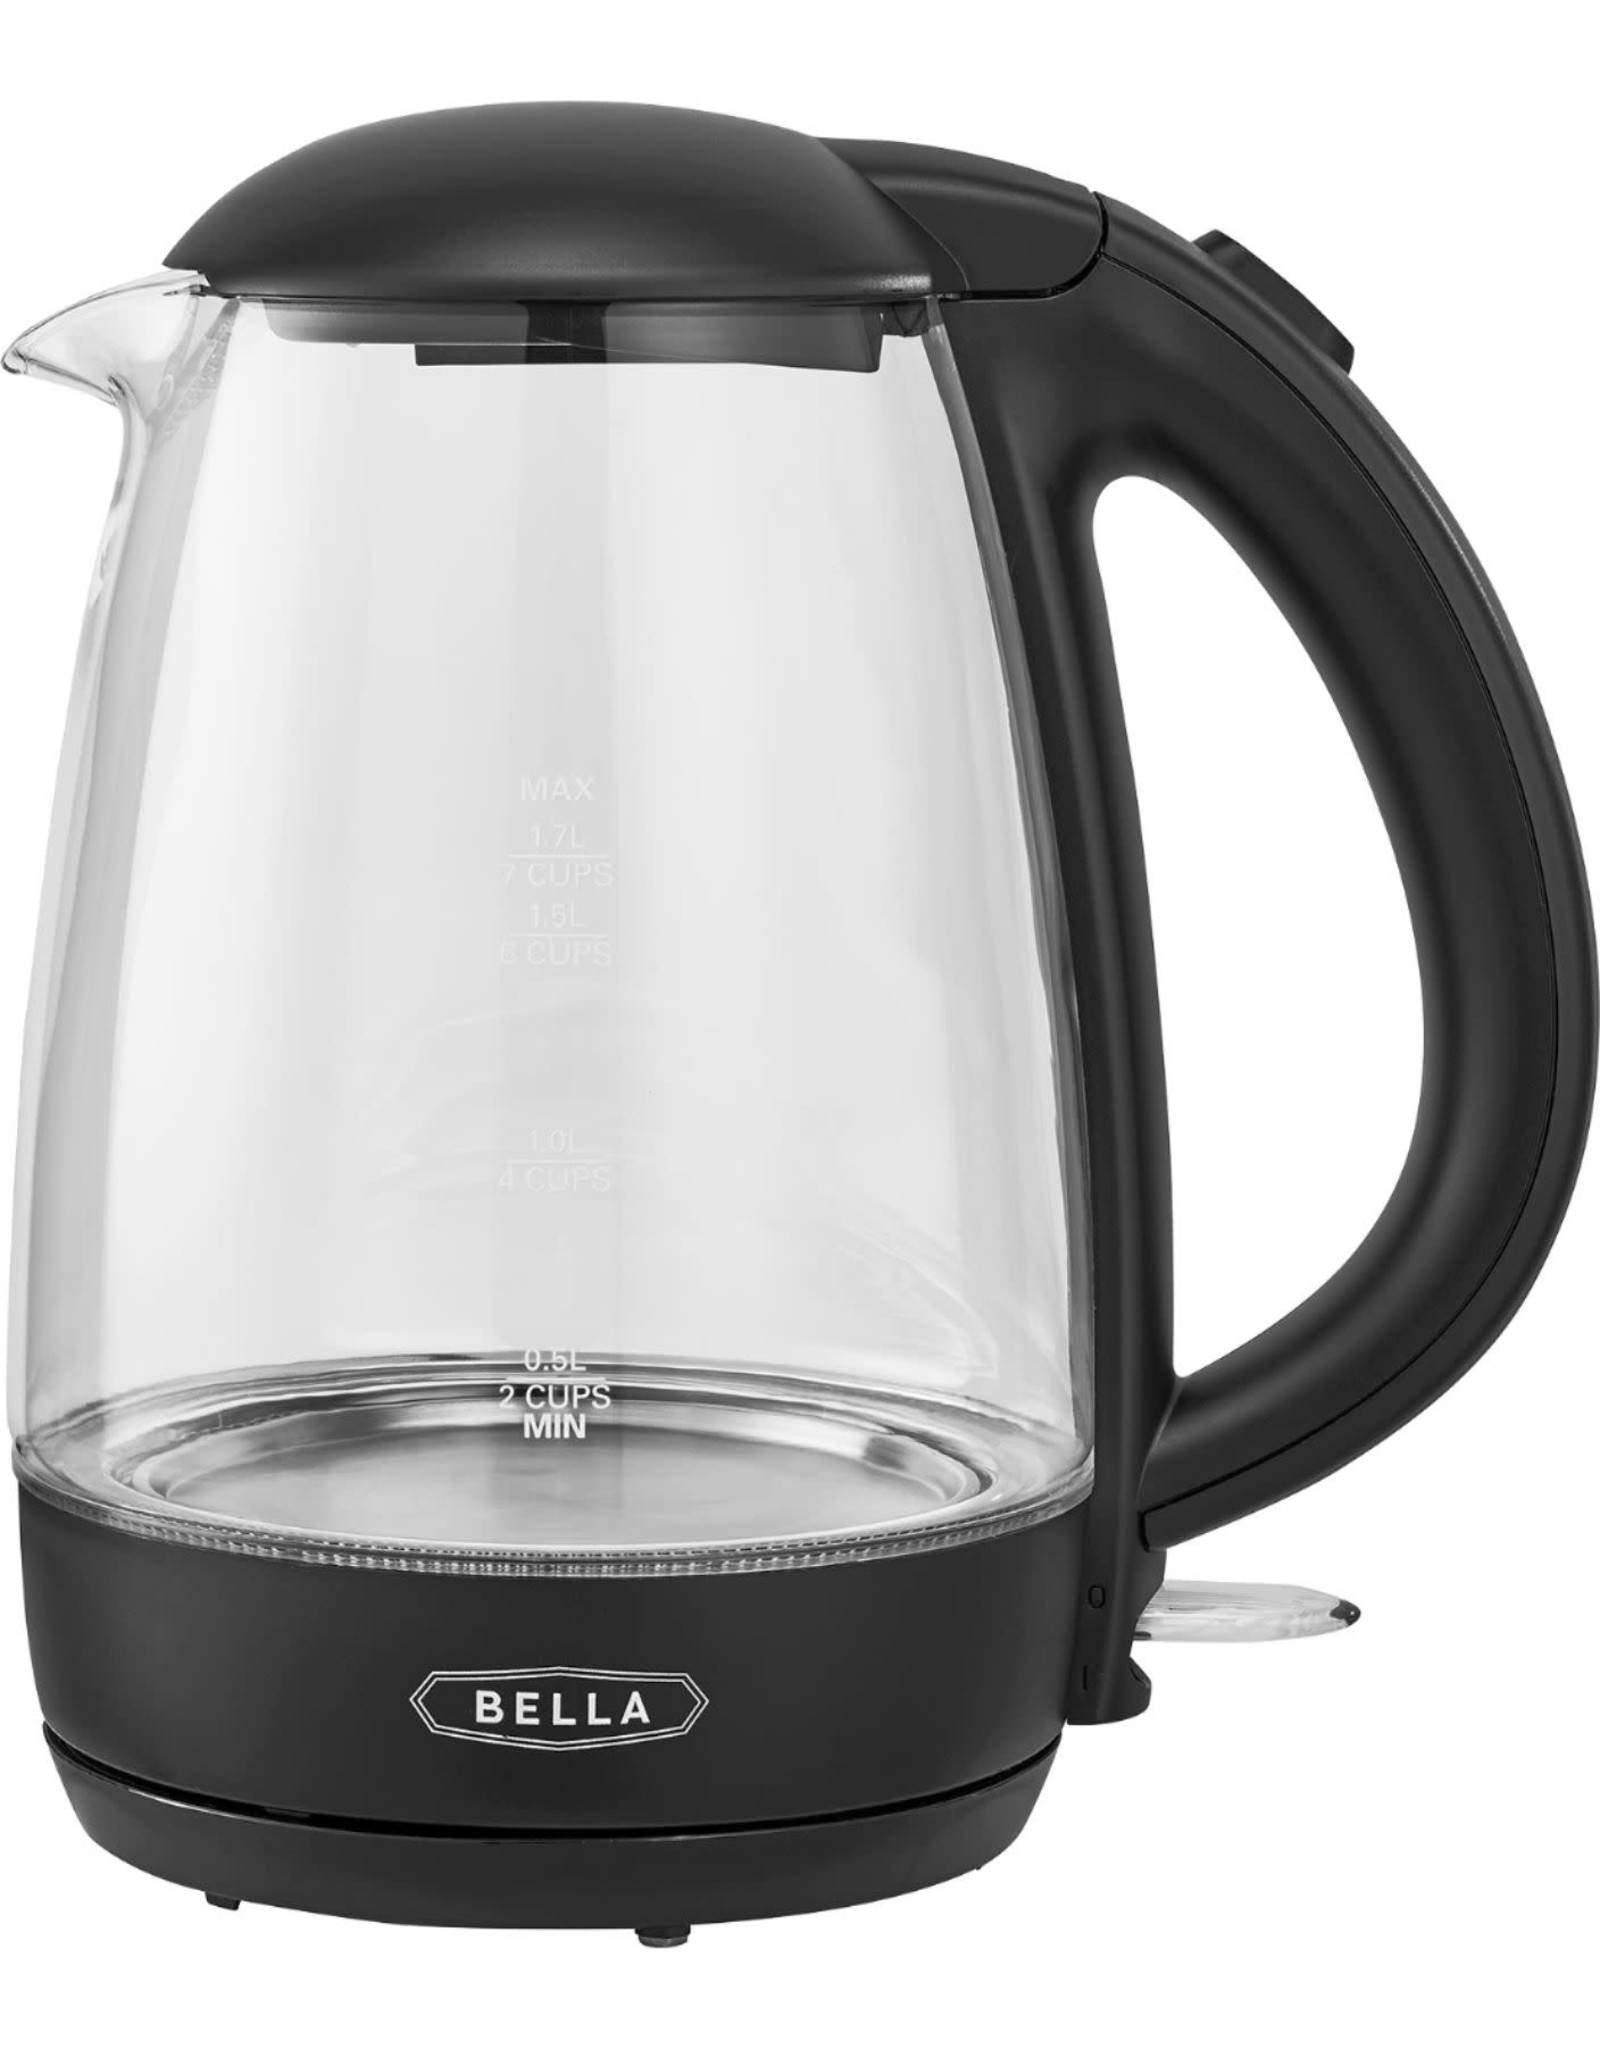 Bella pro 14824 Bella - 1.7L Illuminated Electric Glass Kettle - Clear